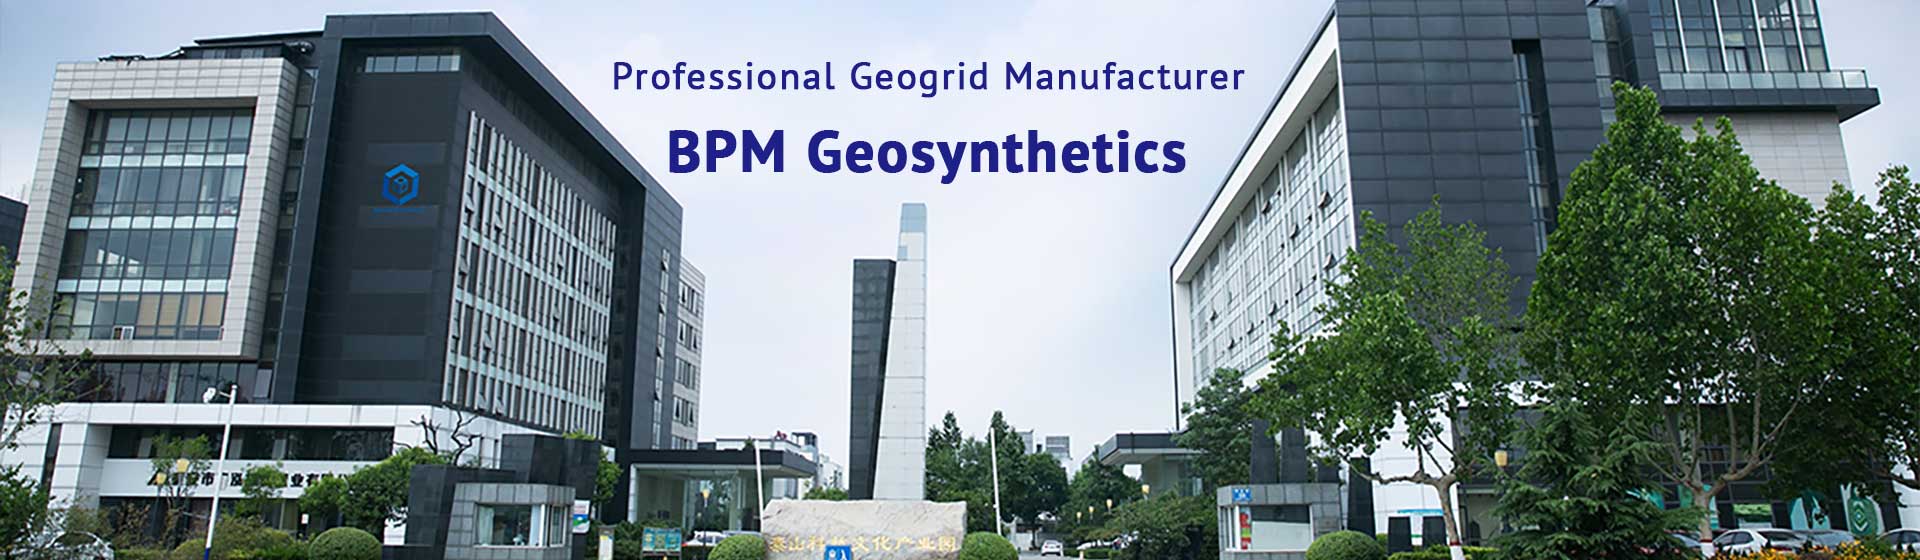 Professional Geogrid Manufacturer